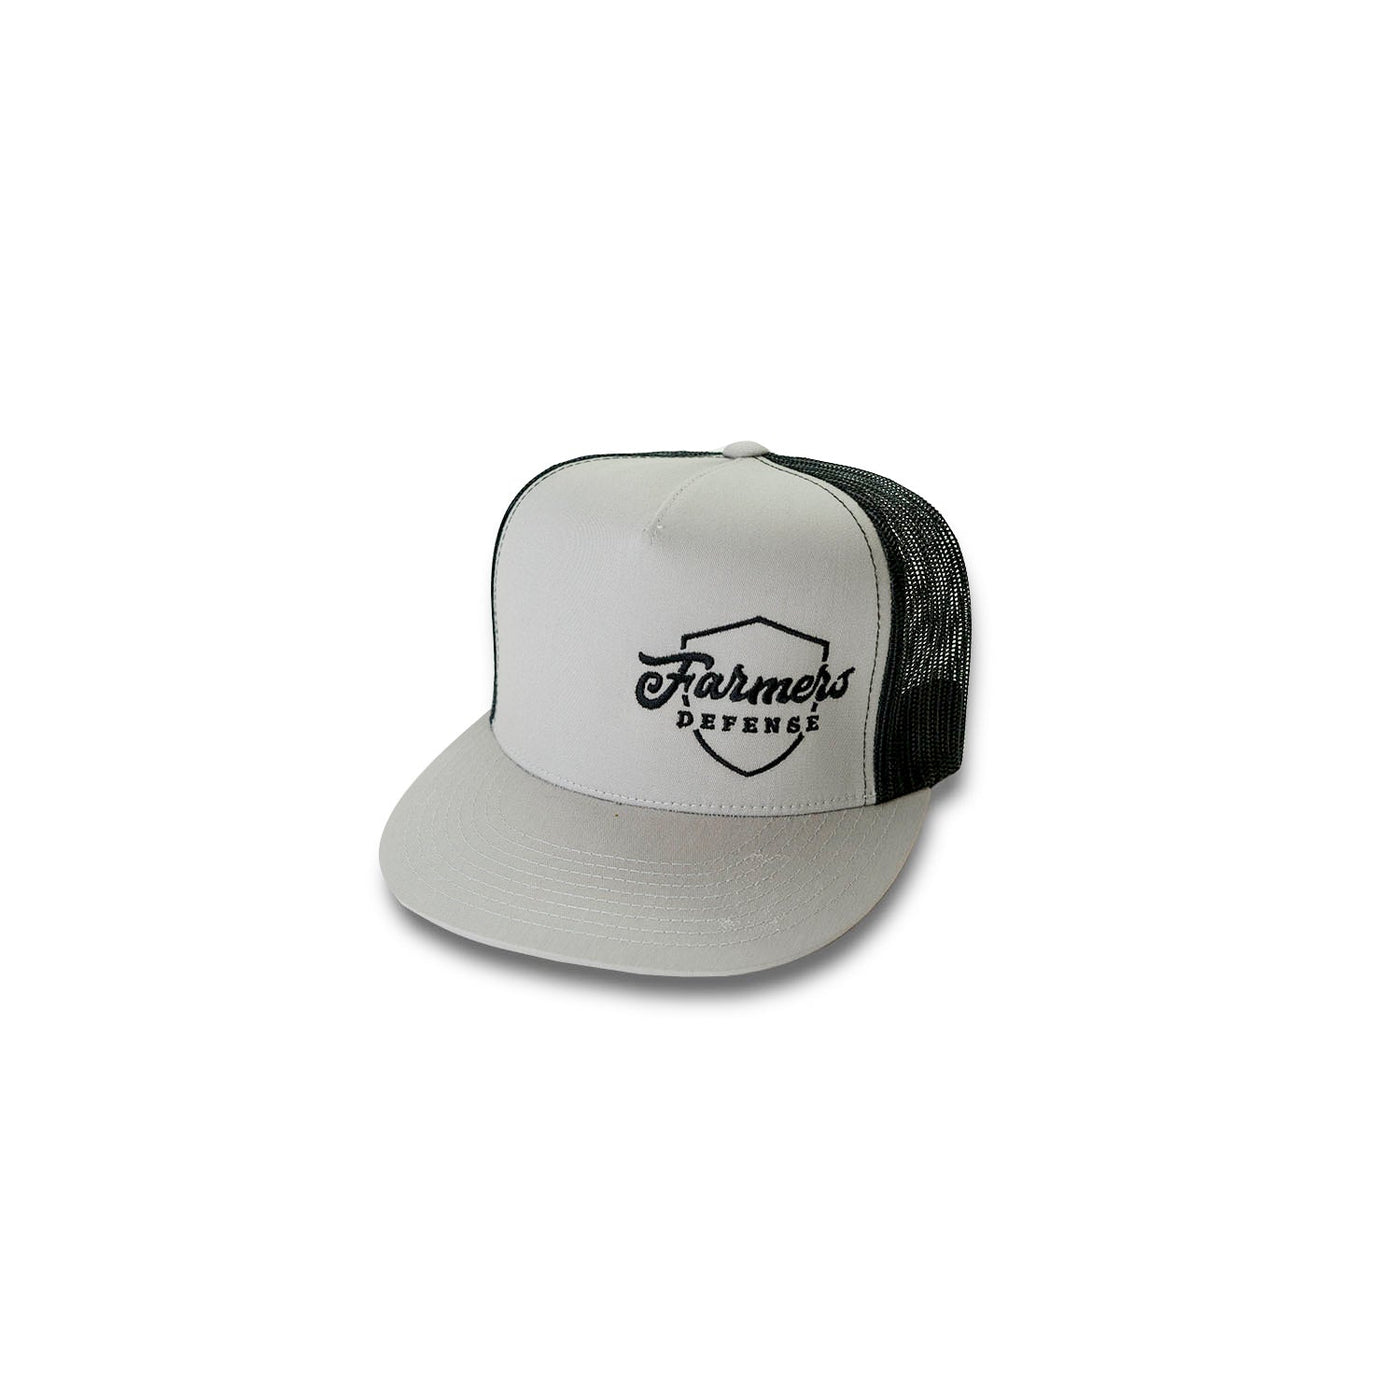 Farmers Defense Trucker Hat -Embroidered Shield Logo Light Grey on Black